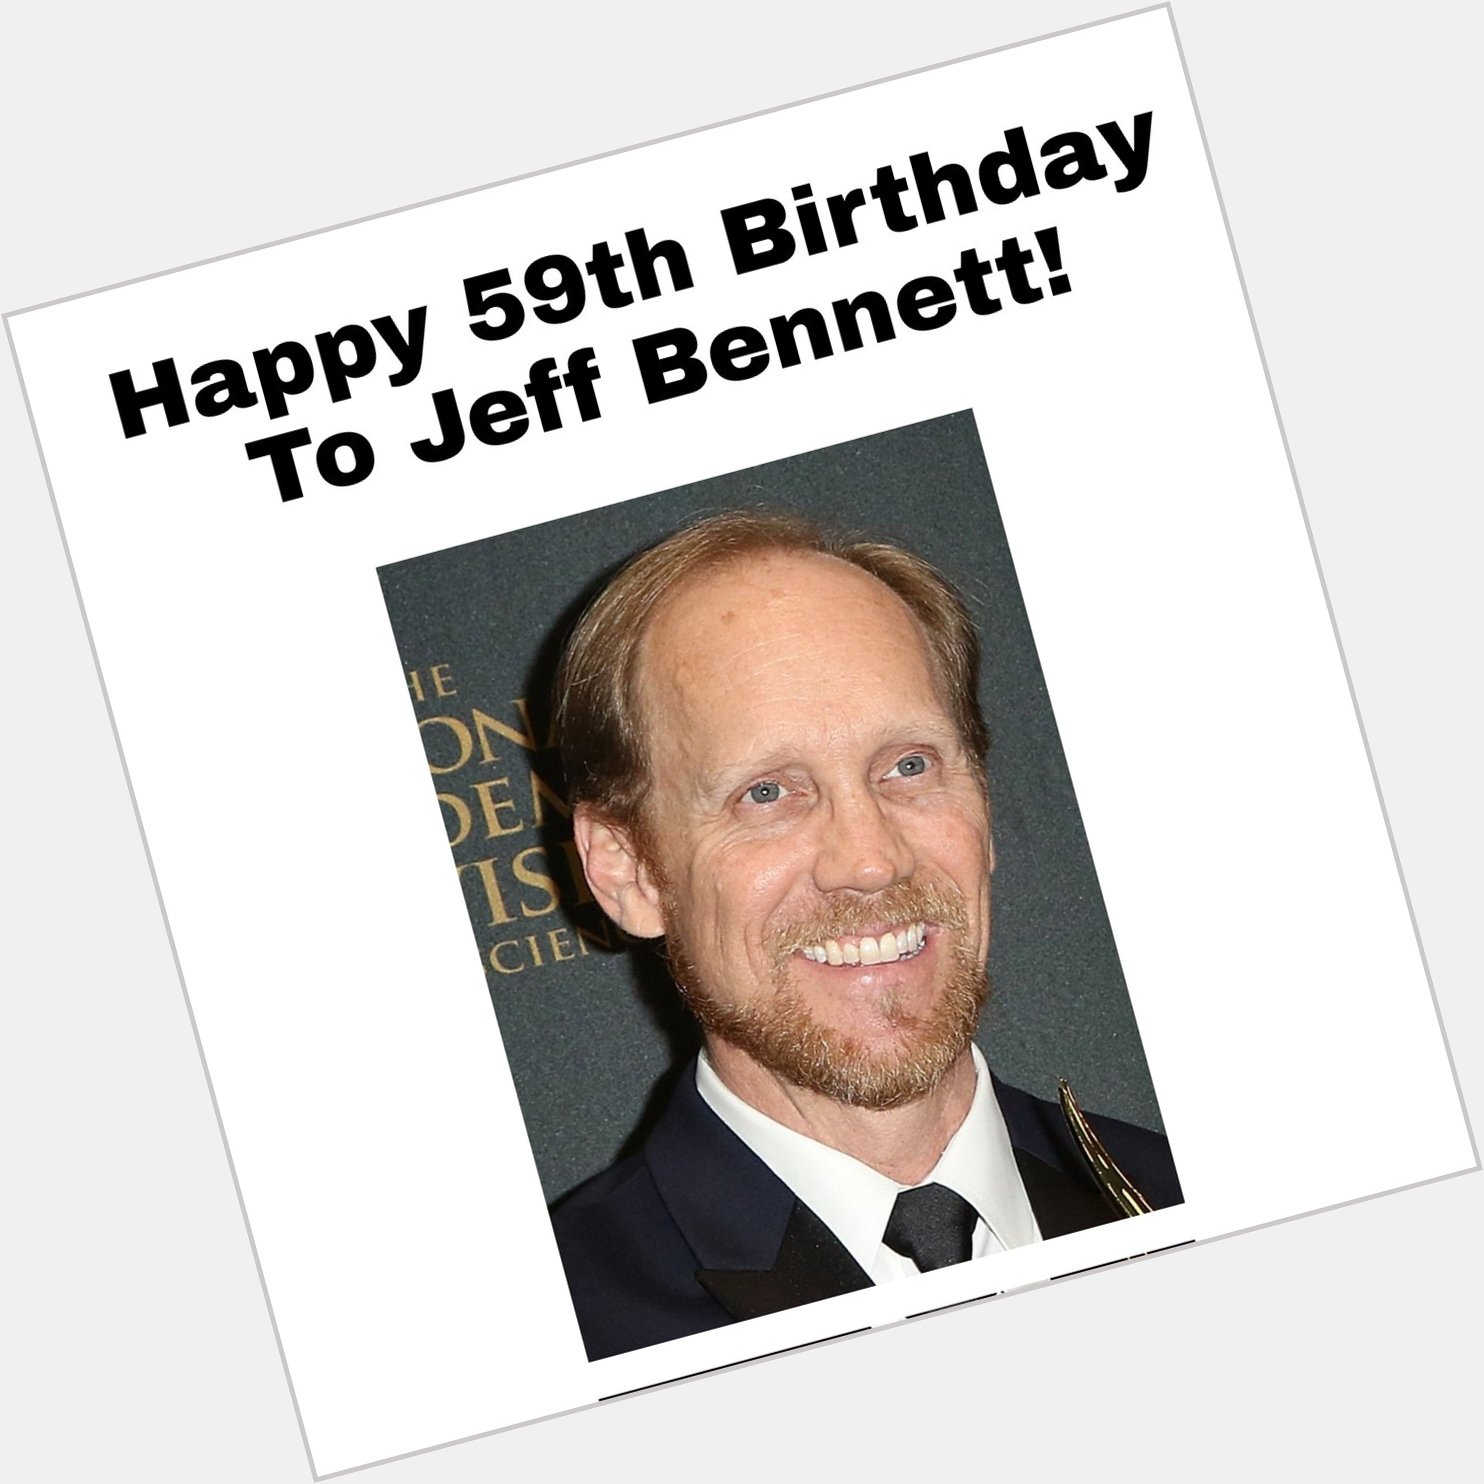 Happy 59th Birthday To Jeff Bennett! 